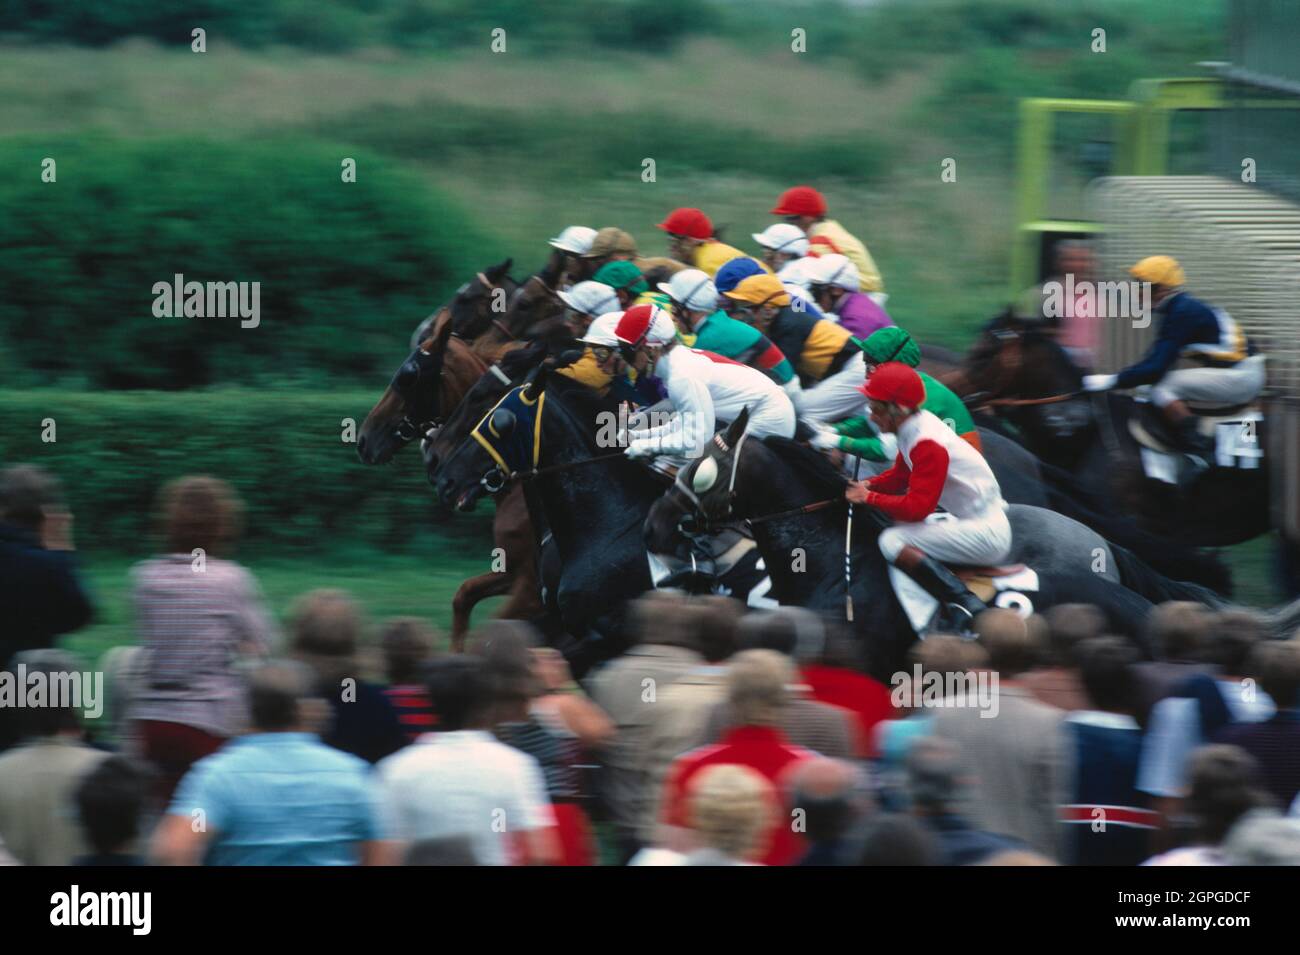 Sport. Horse racing on turf. Stock Photo